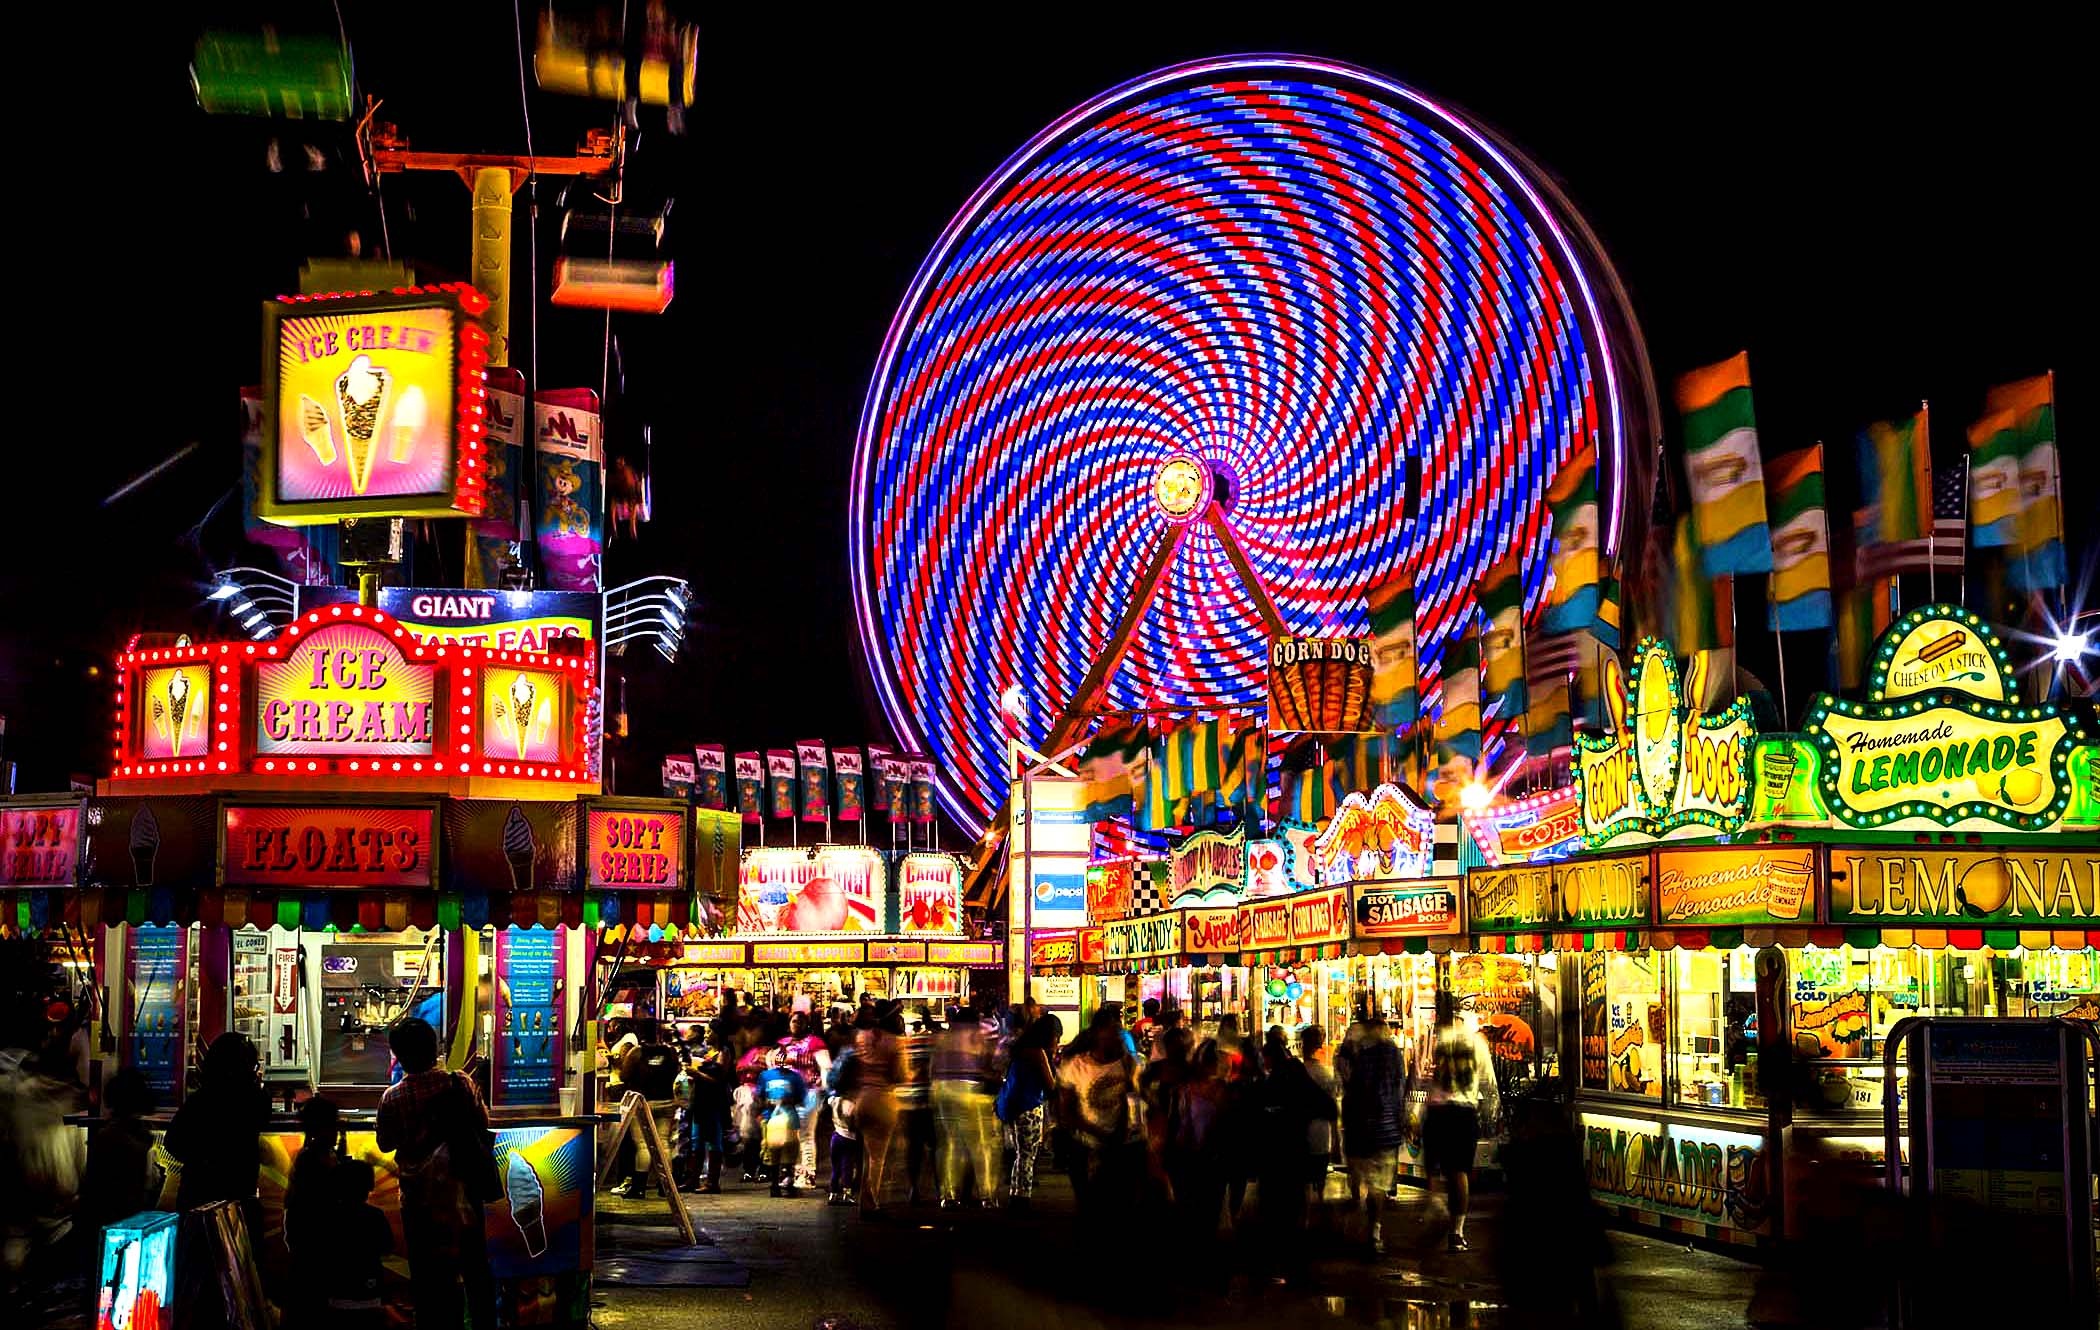 Fun Fair: Carnival lights at night, An amusement park with rides and games. 2100x1330 HD Wallpaper.